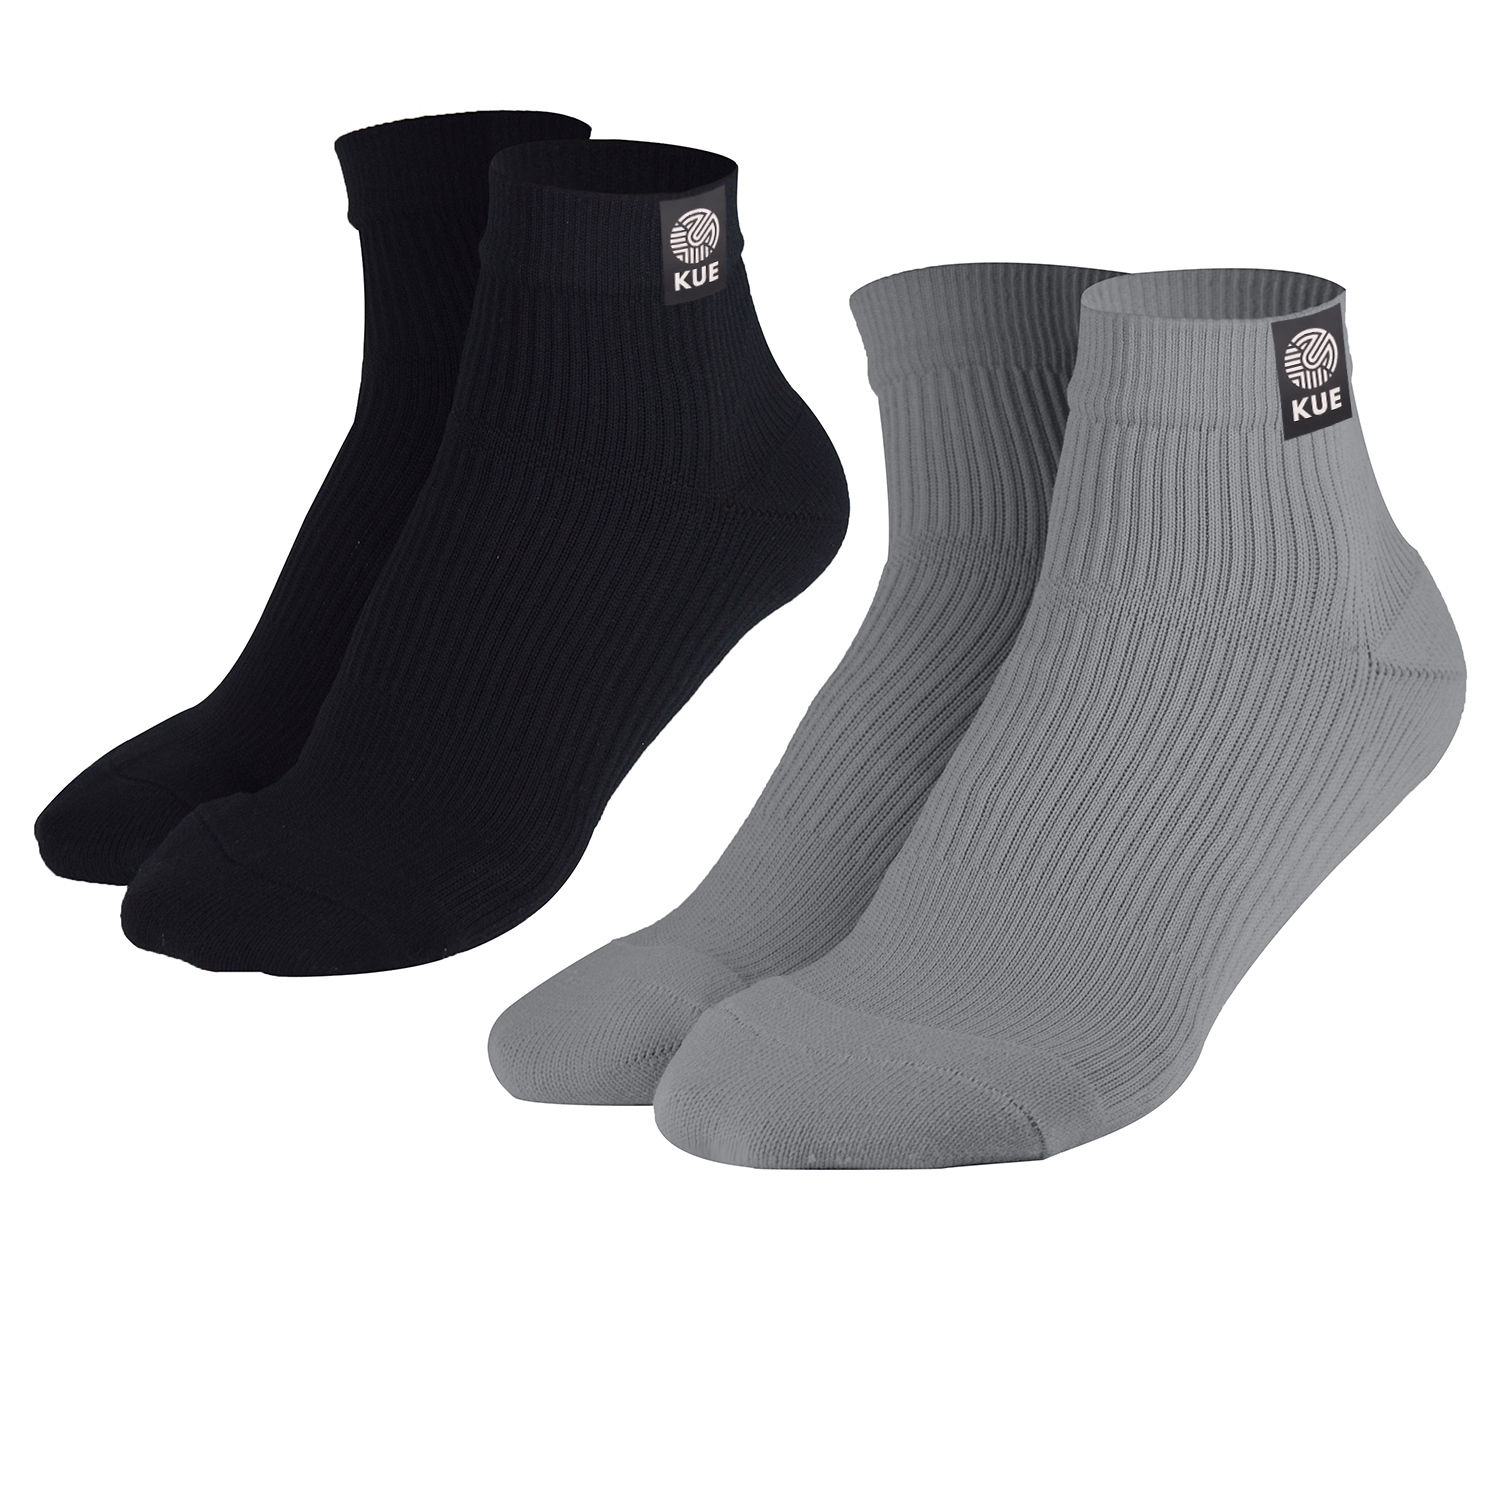 Black-Grey Ankle Length Sports | Athletic Socks (Pair of 2)